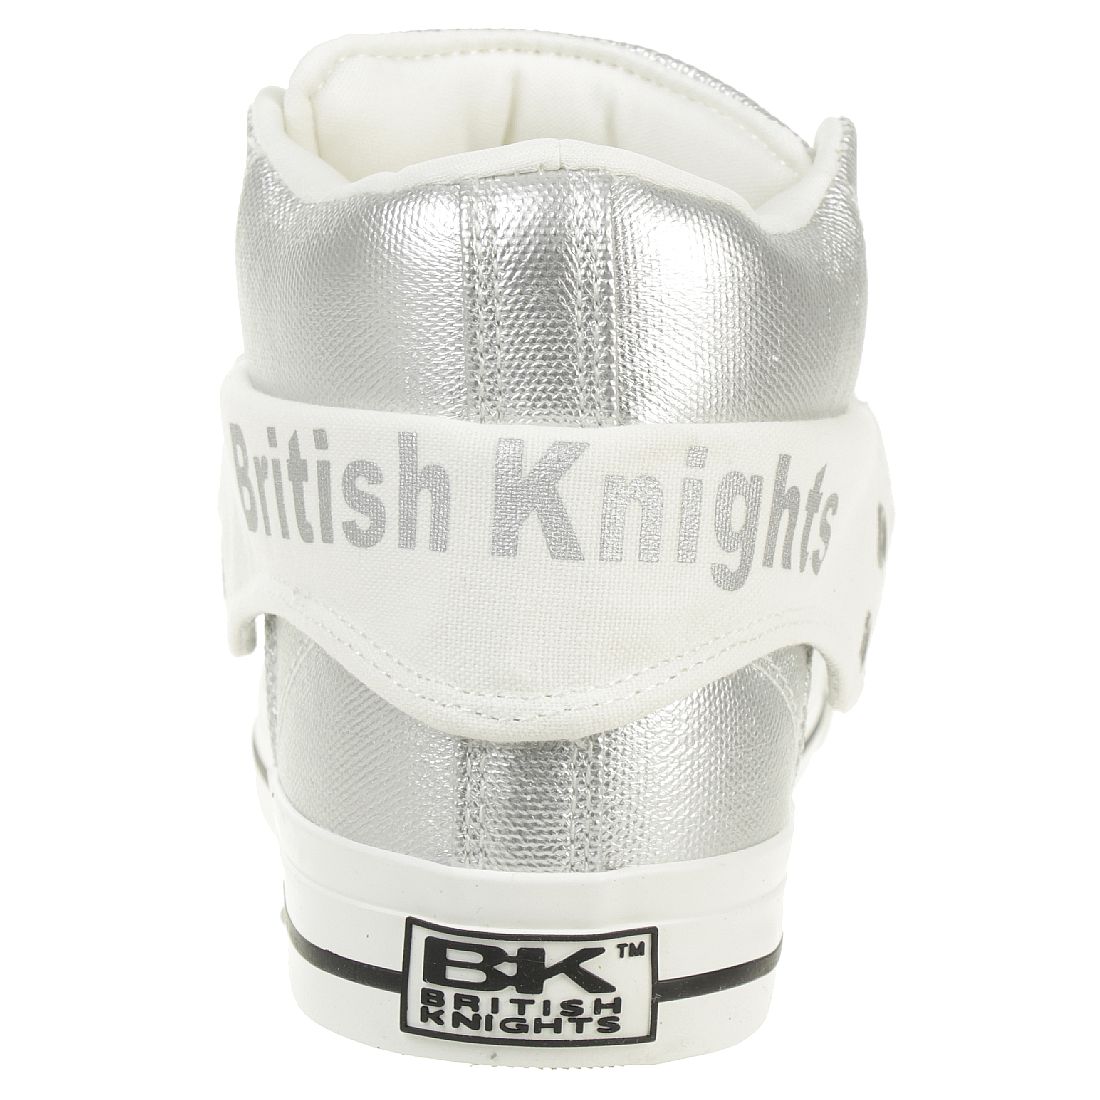 British Knights ROCO Metallic BK Damen Sneaker B43-3706-01 silber metallic Textil